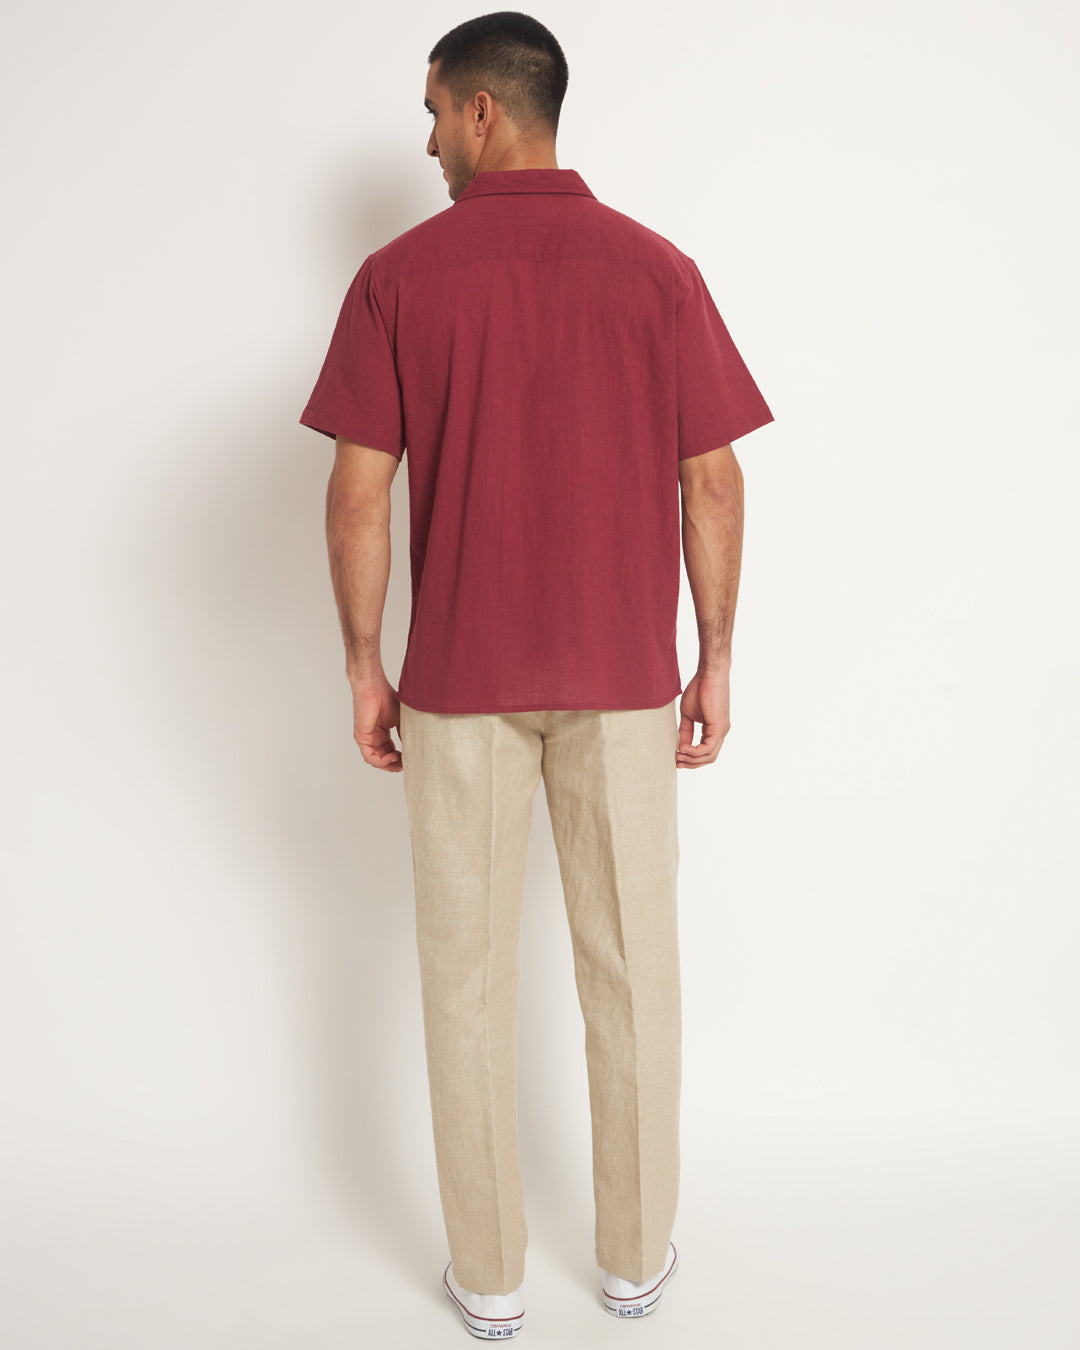 Combo: Classic Scarlet Oak Half Sleeves Men's Shirt & Pants